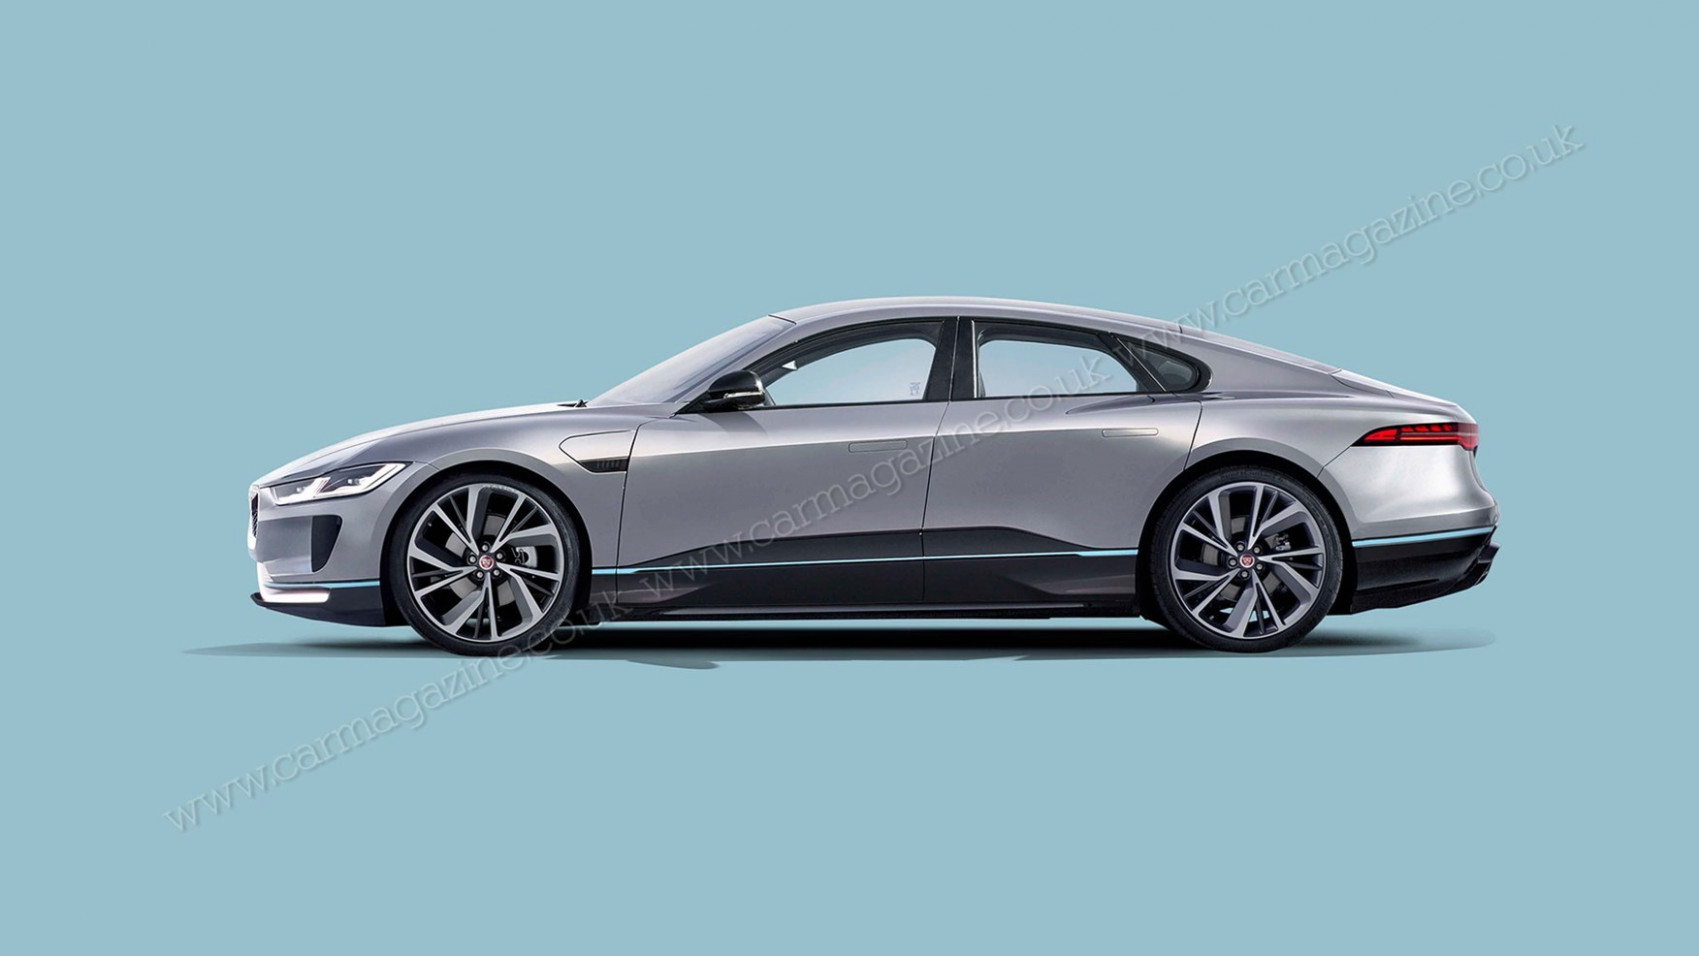 2022 Jaguar Xe Review - Cars Review : Cars Review